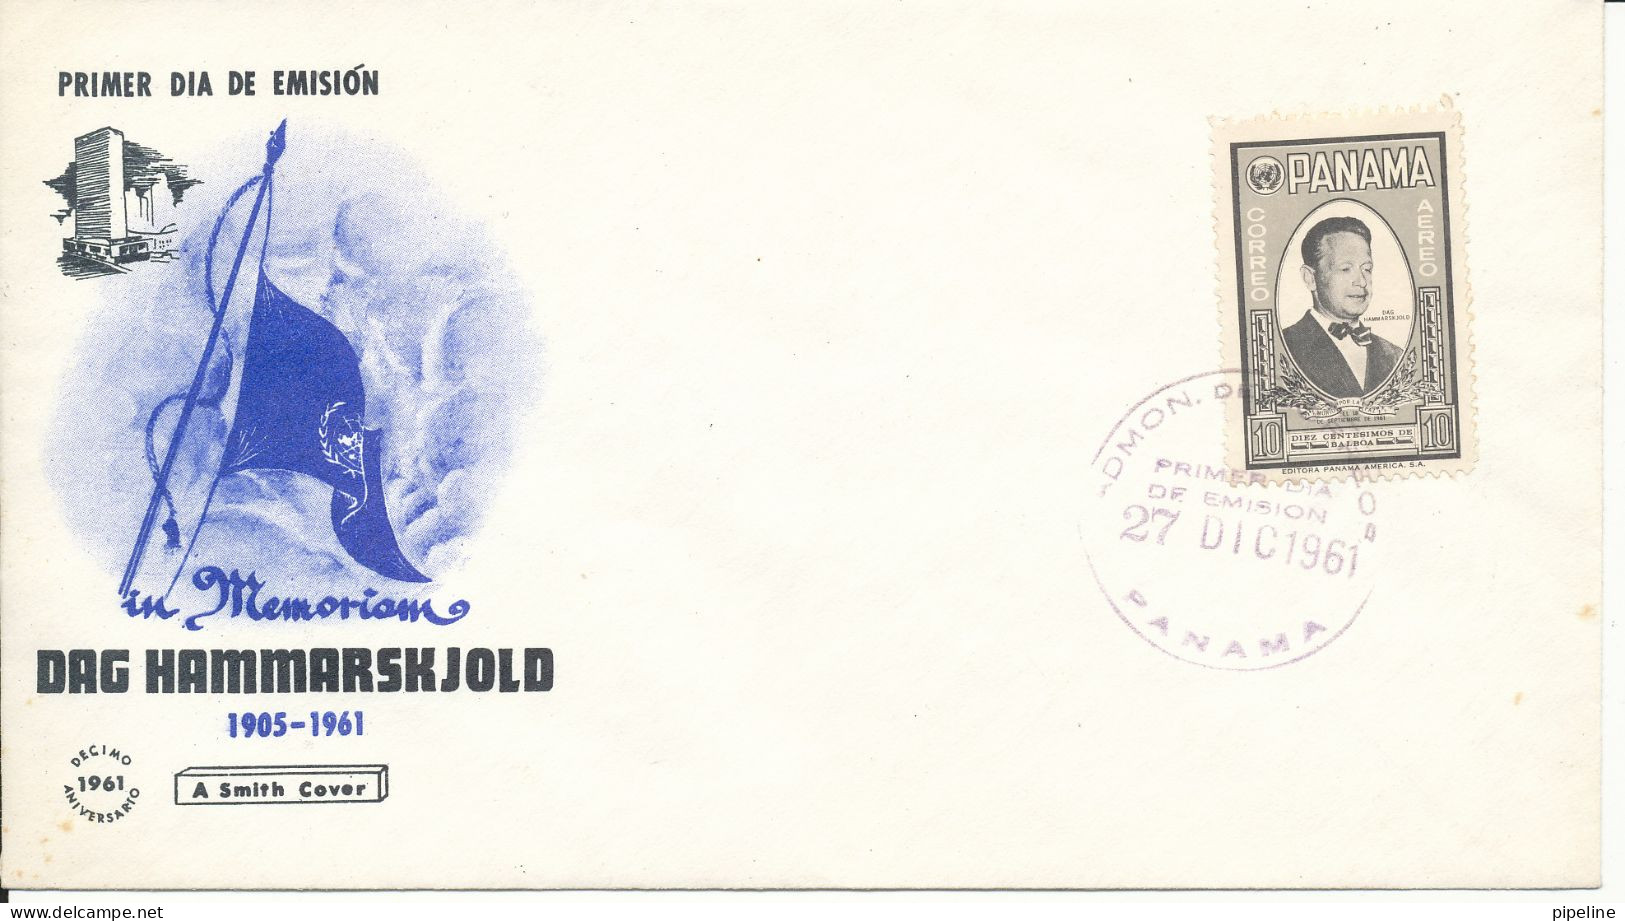 Panama FDC DAG HAMMARSKJOLD With Cachet 27-12-1961 Also Stamp On The Backside Of The Cover - Dag Hammarskjöld